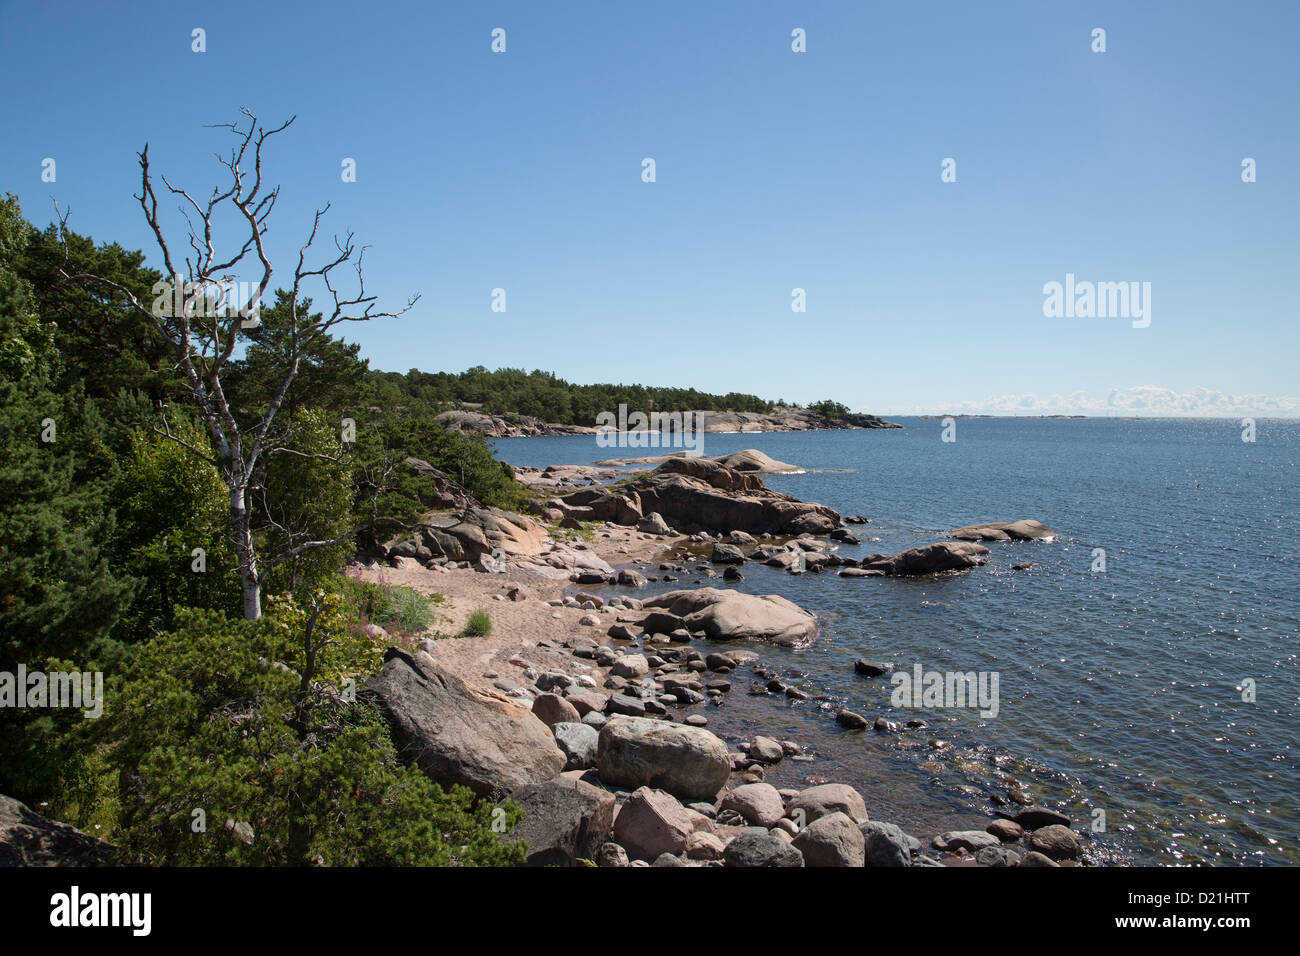 Rocky coastline, Hanko, Southern Finland, Finland, Europe Stock Photo